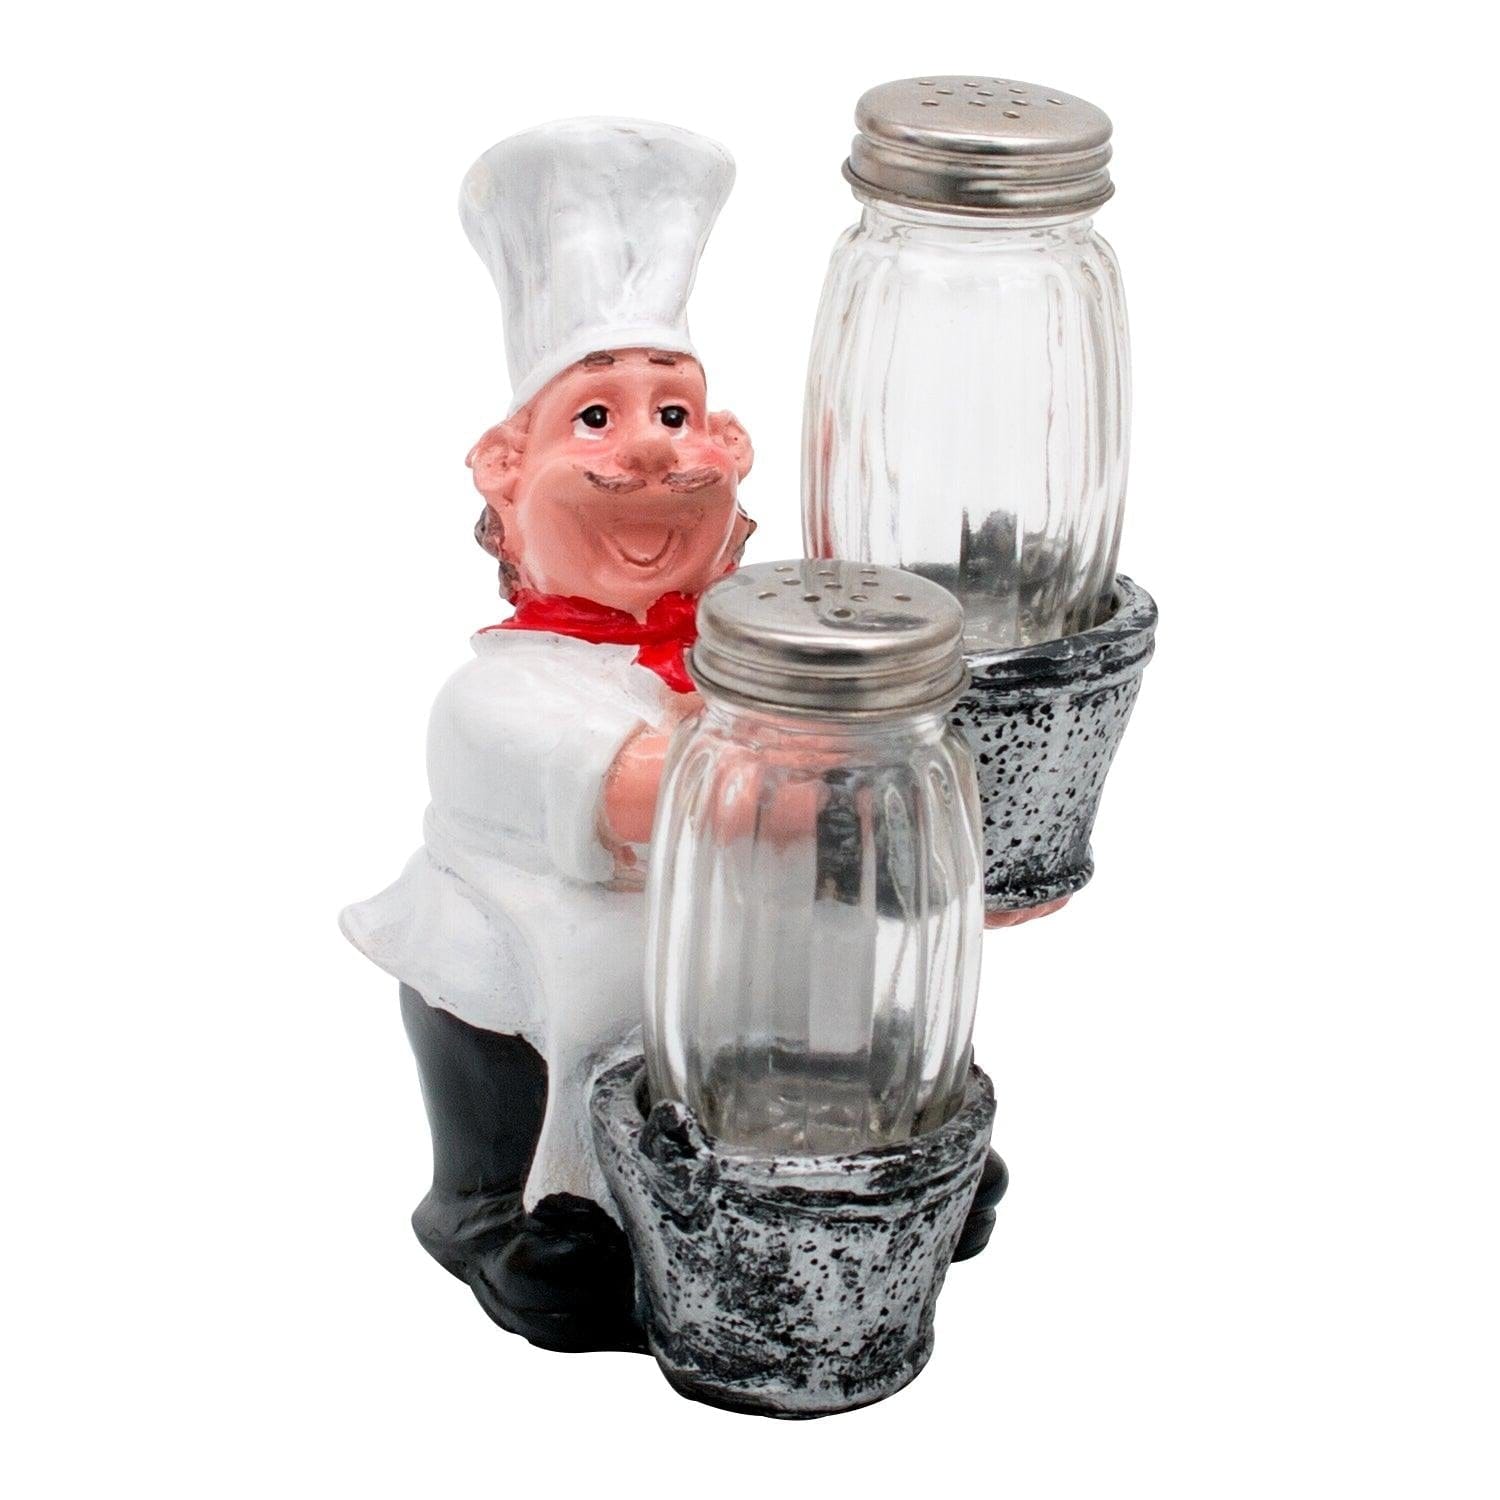 Foodie Chef Figurine Resin Salt & Pepper Shakers in Basket Holder Set (Right)